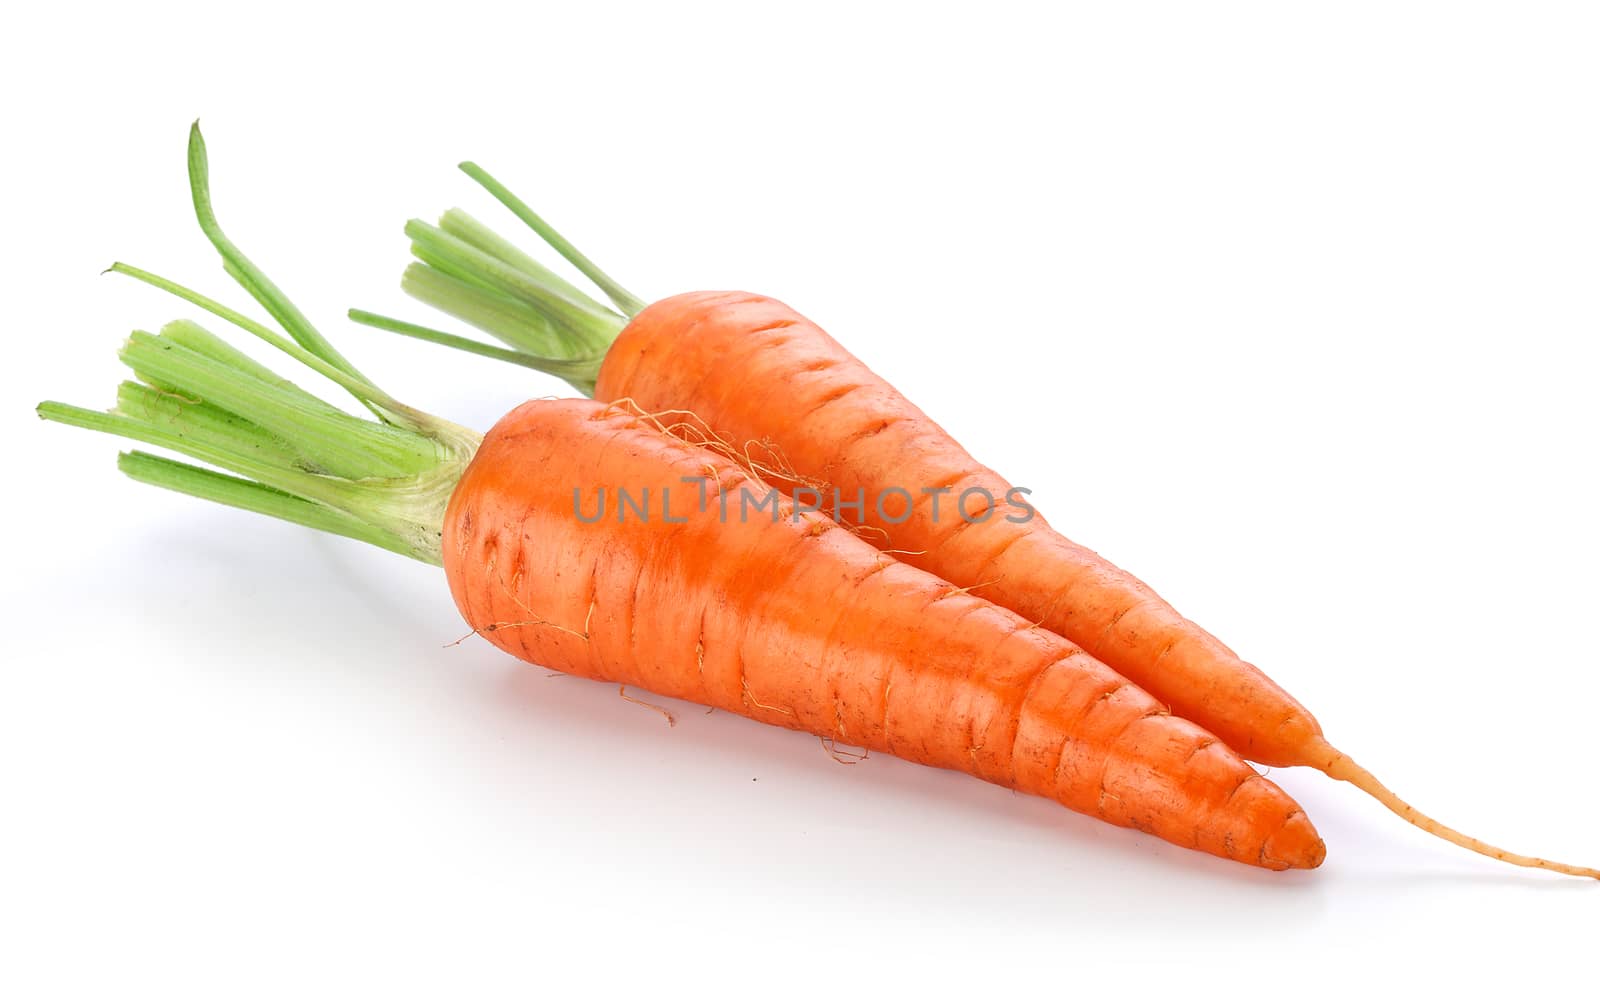 Two fresh raw carrots by Angorius